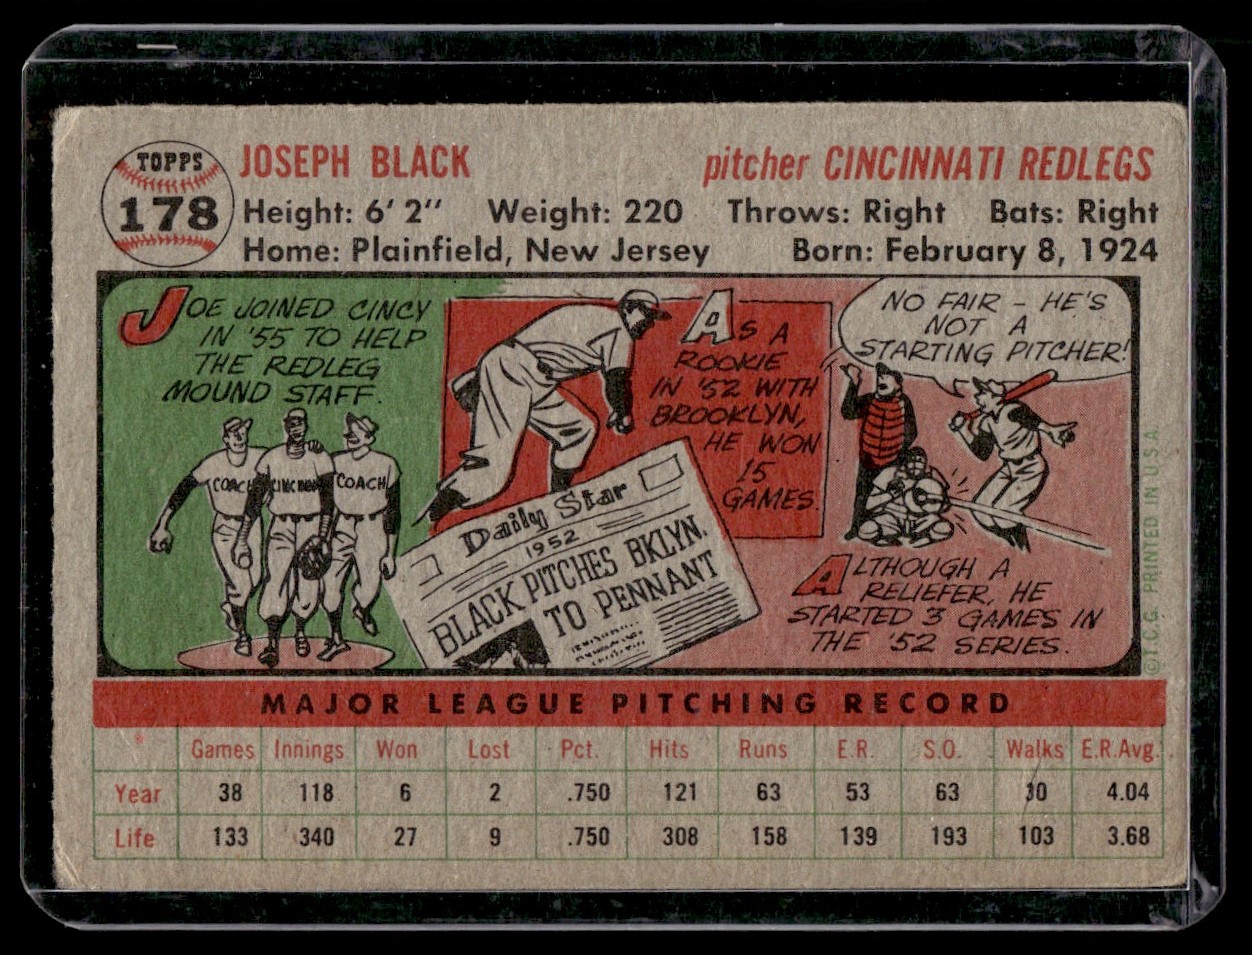 1955 Topps Joe Black #178 card back image